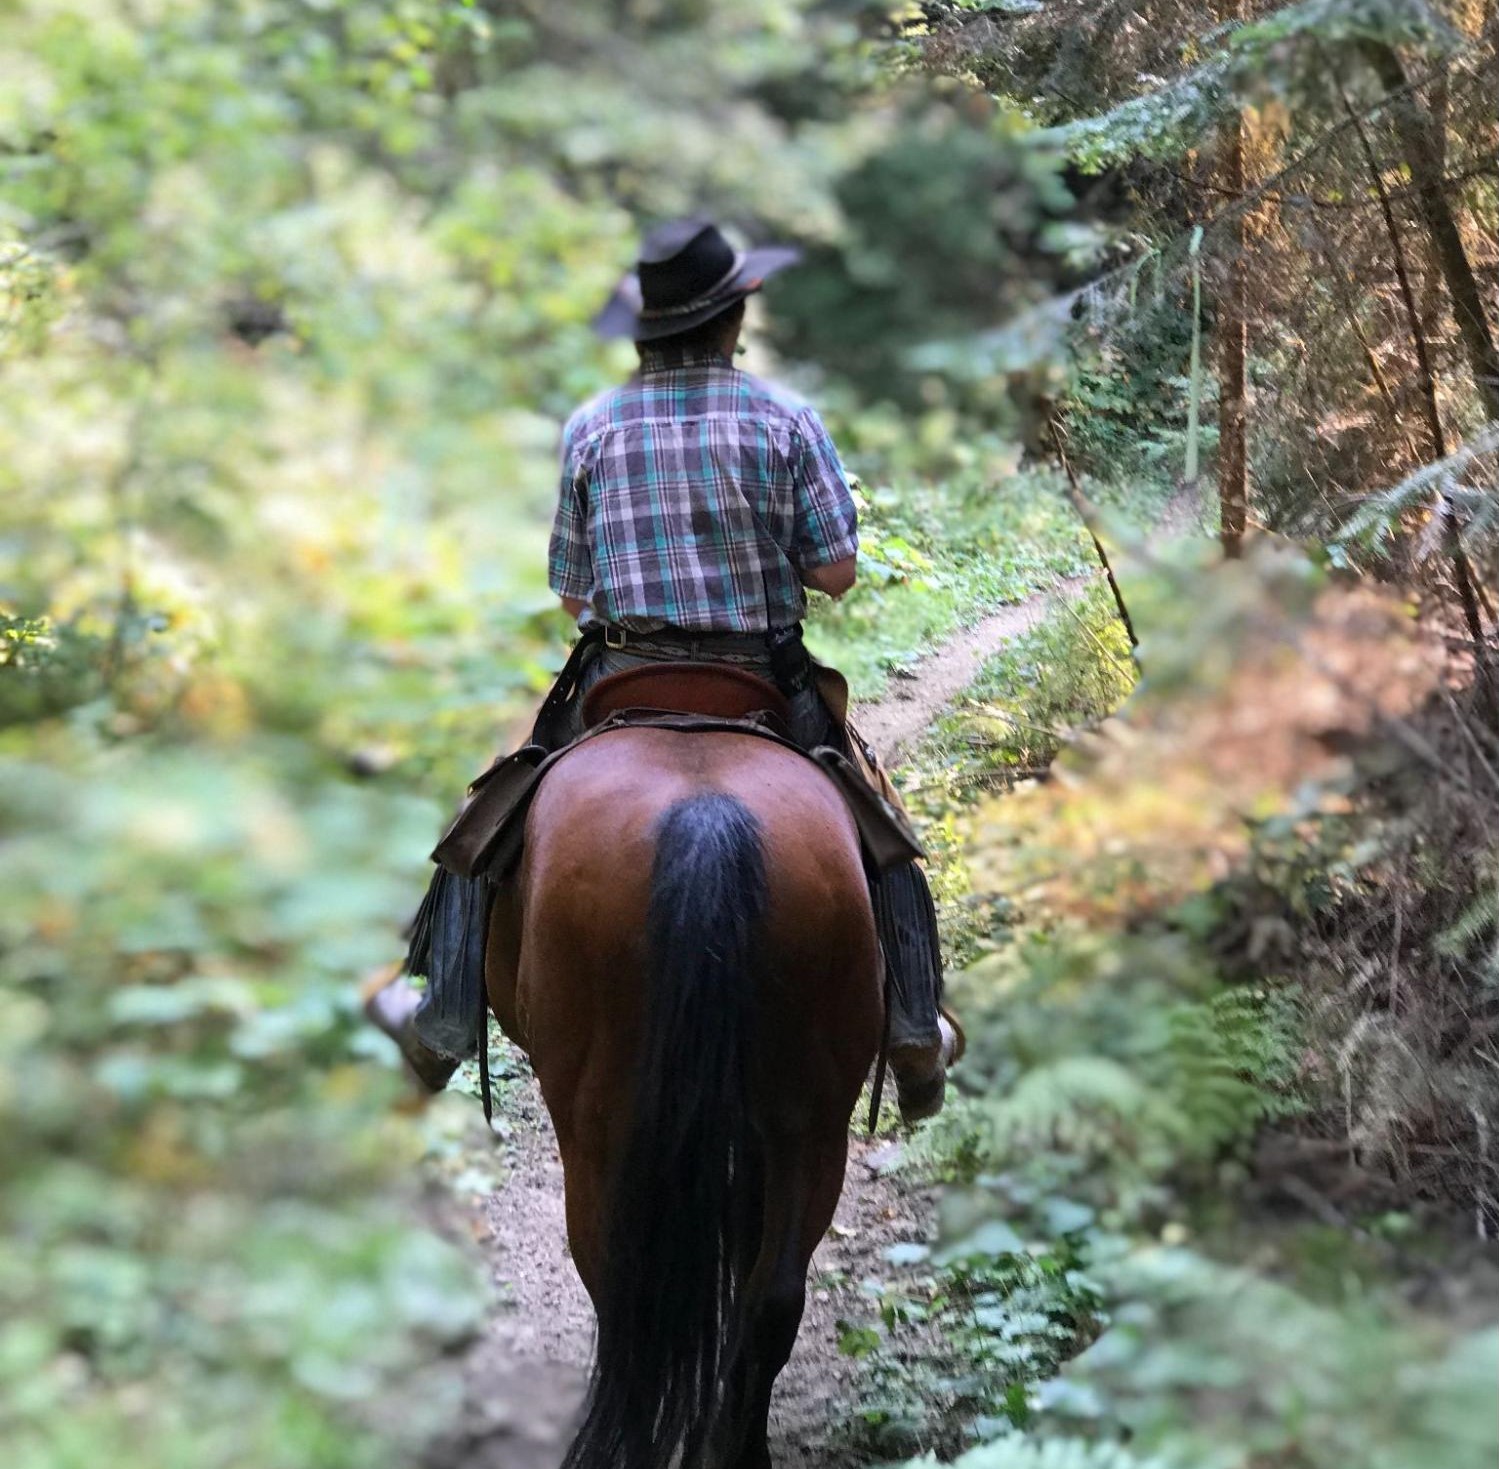 A man rides on horseback along a trail through the dense forest.